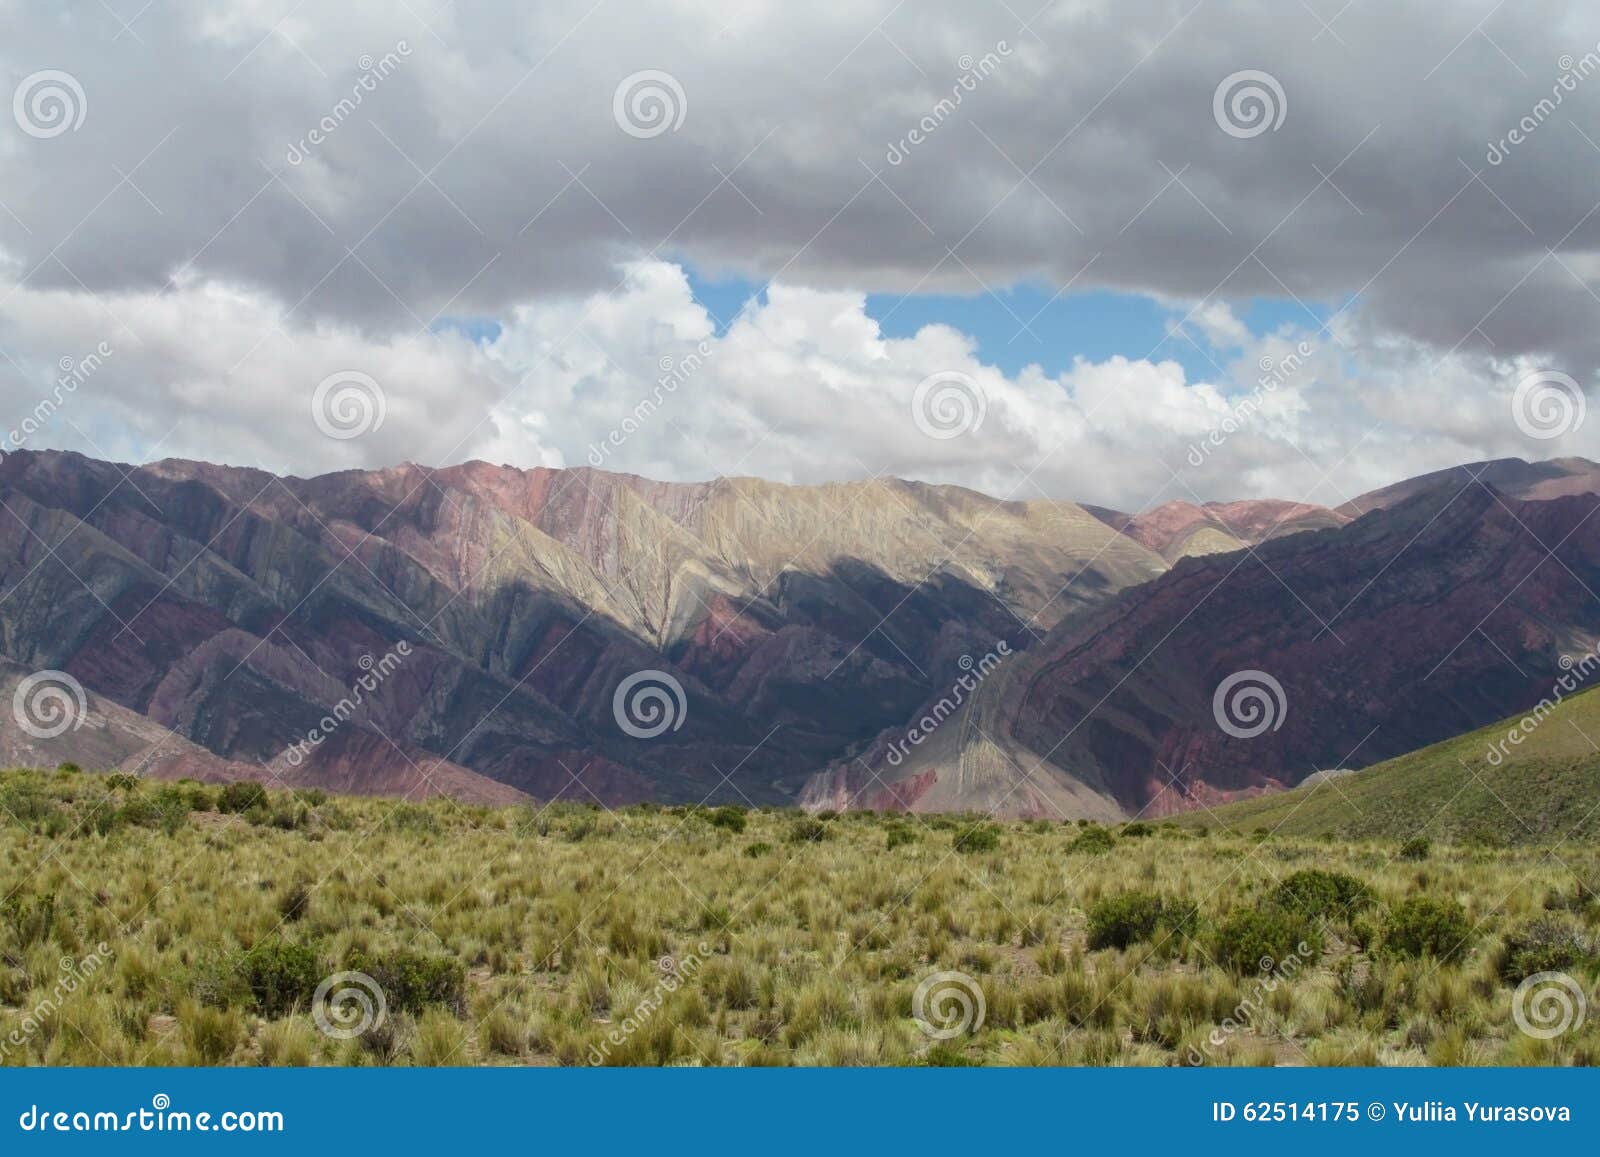 cerro de siete colores, argentina mountains